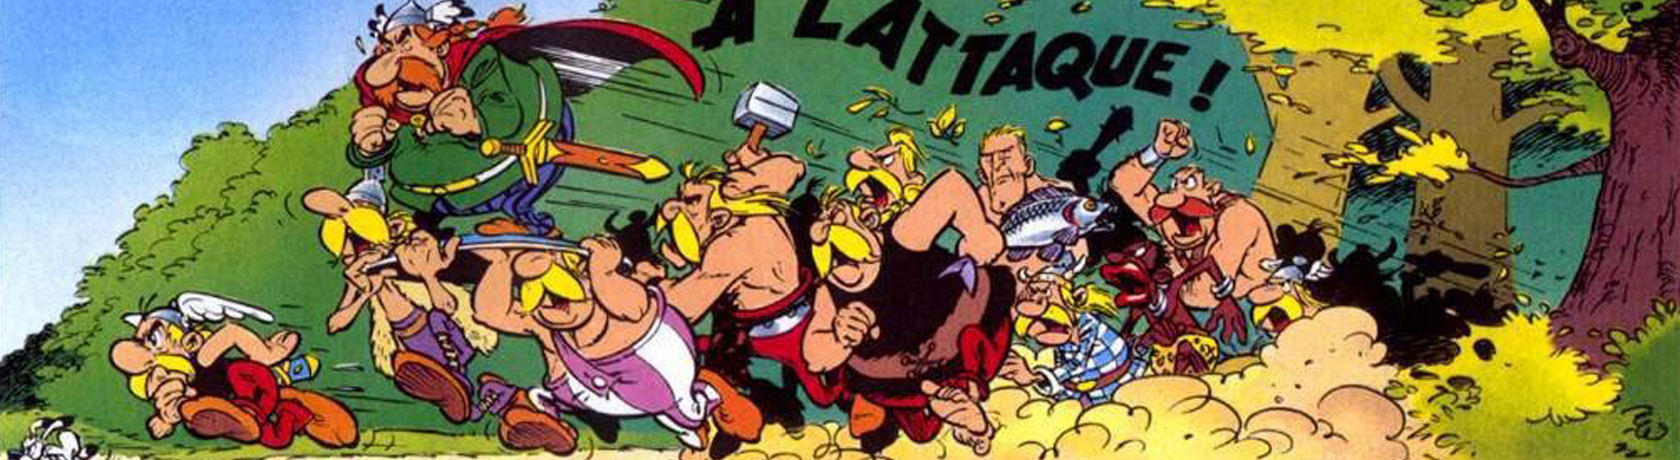 asterix.png#asset:248